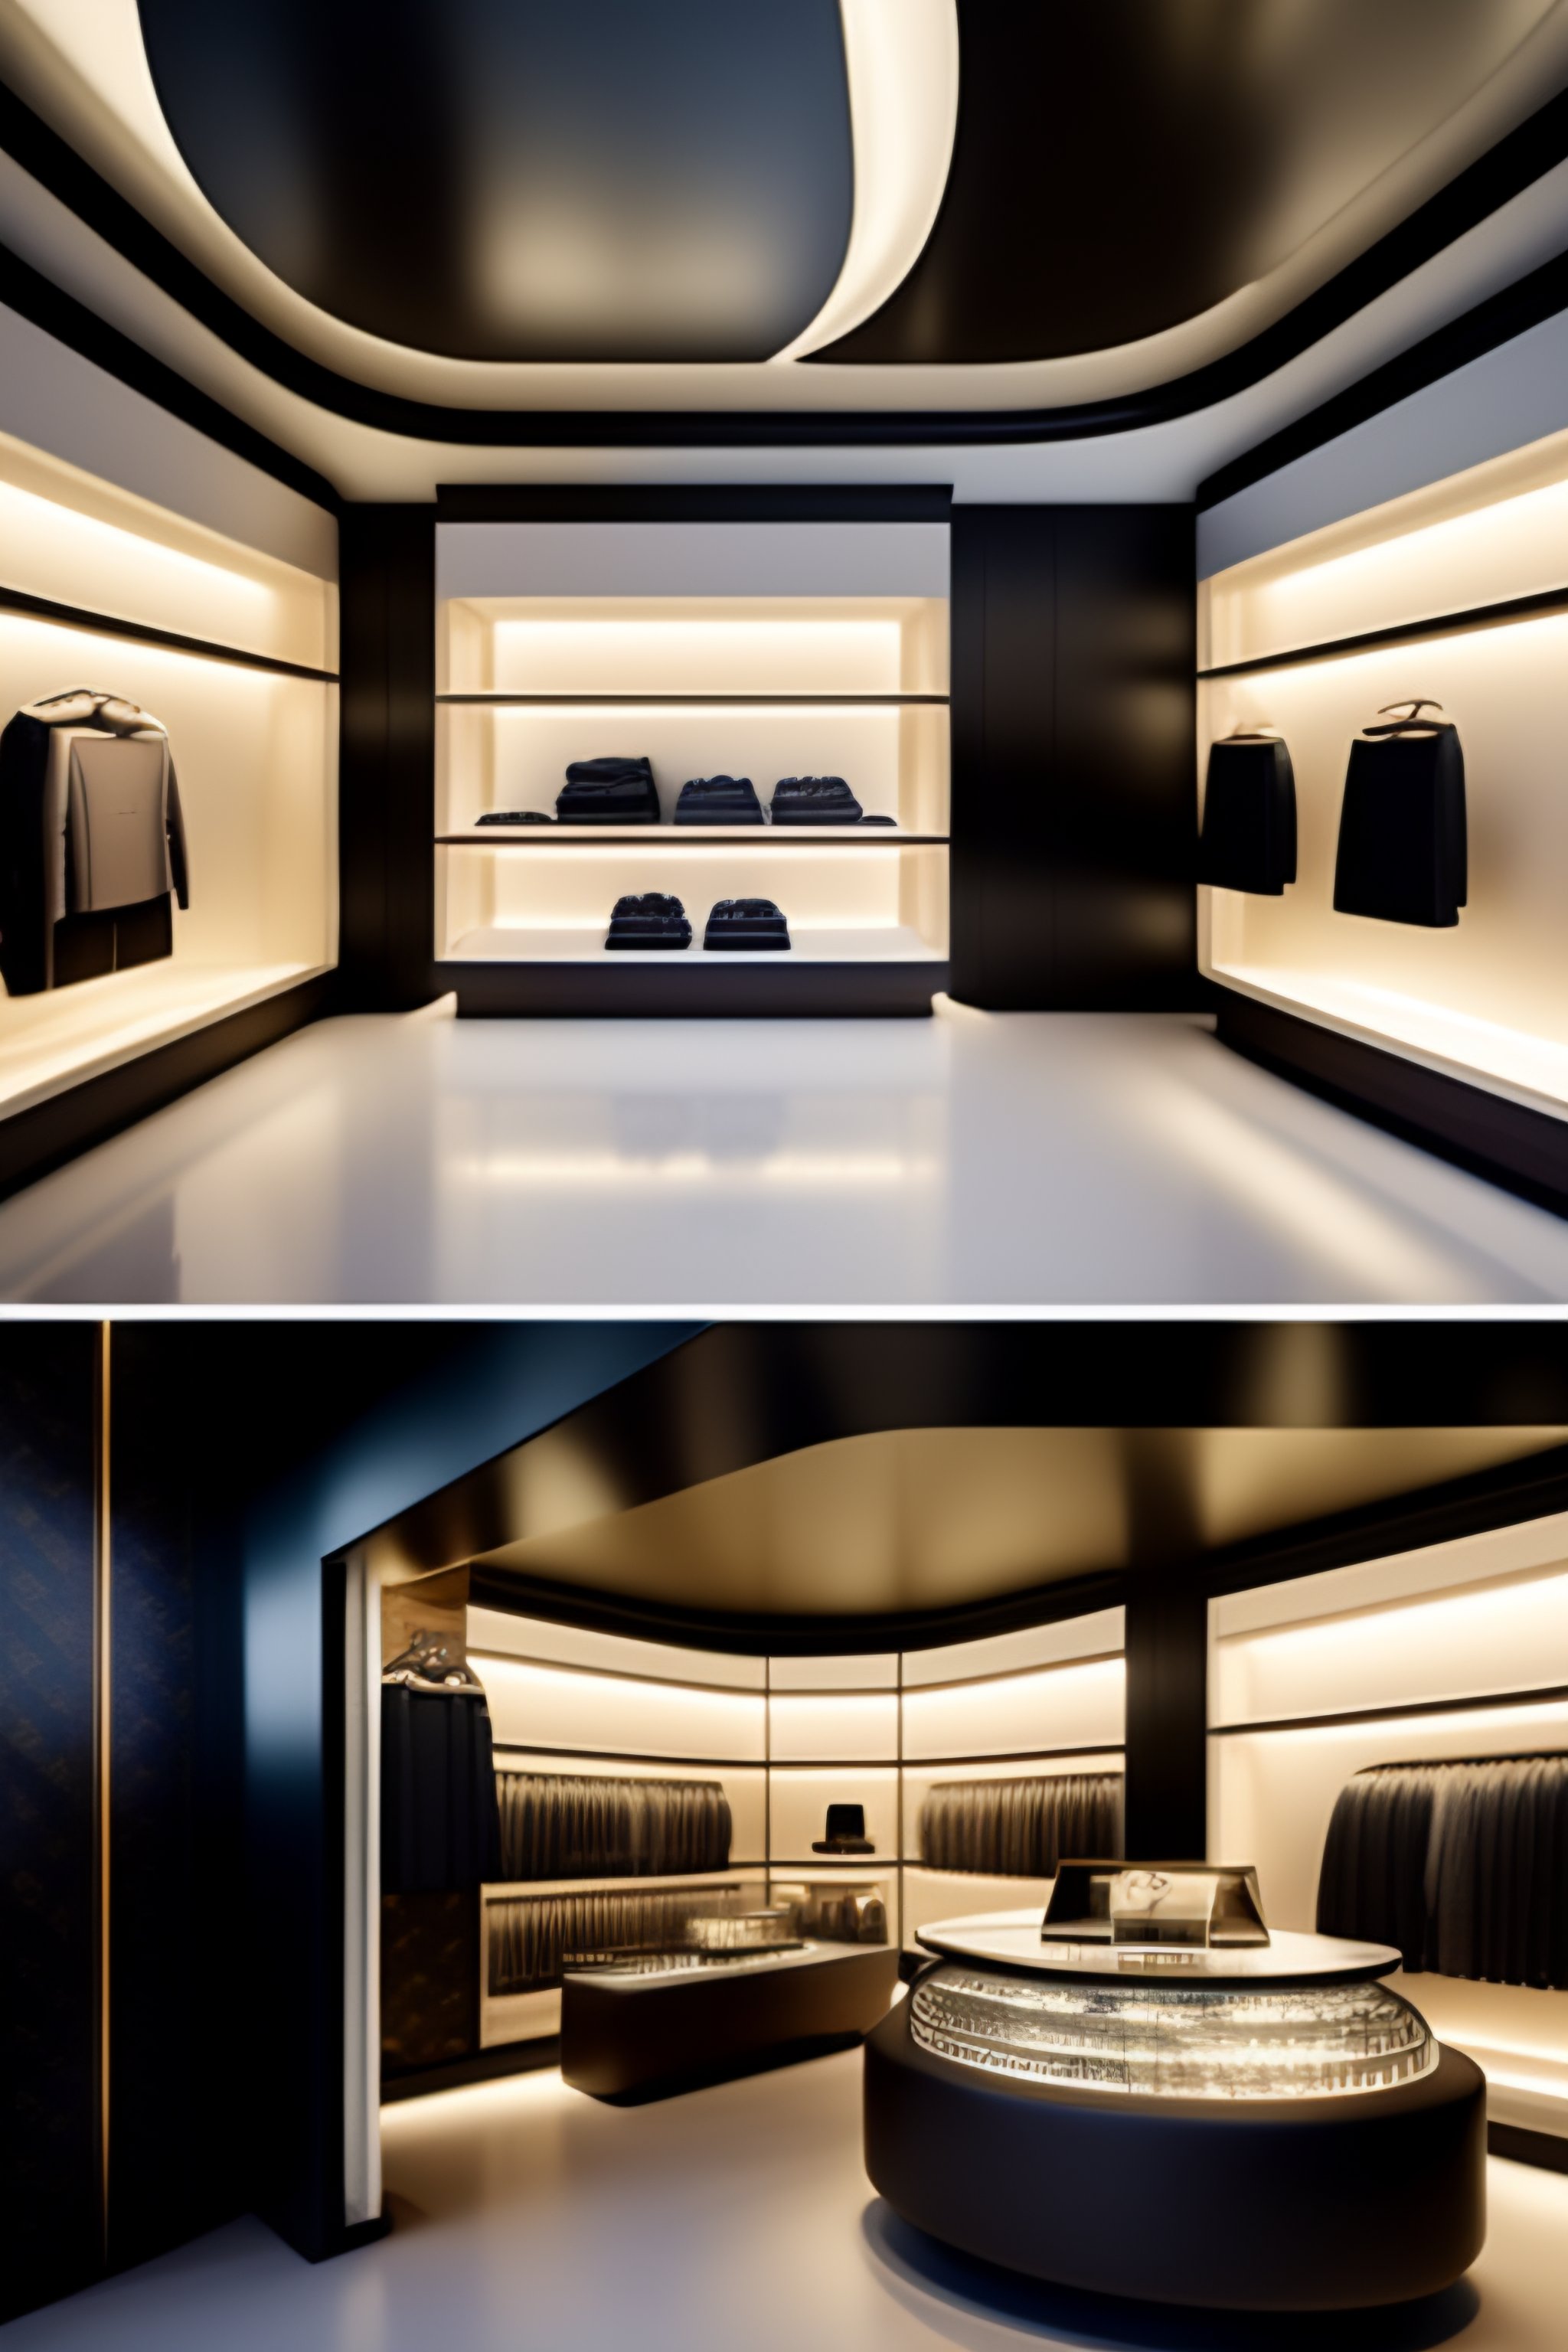 Retail Design: Tienda Louis Vuitton - América Retail